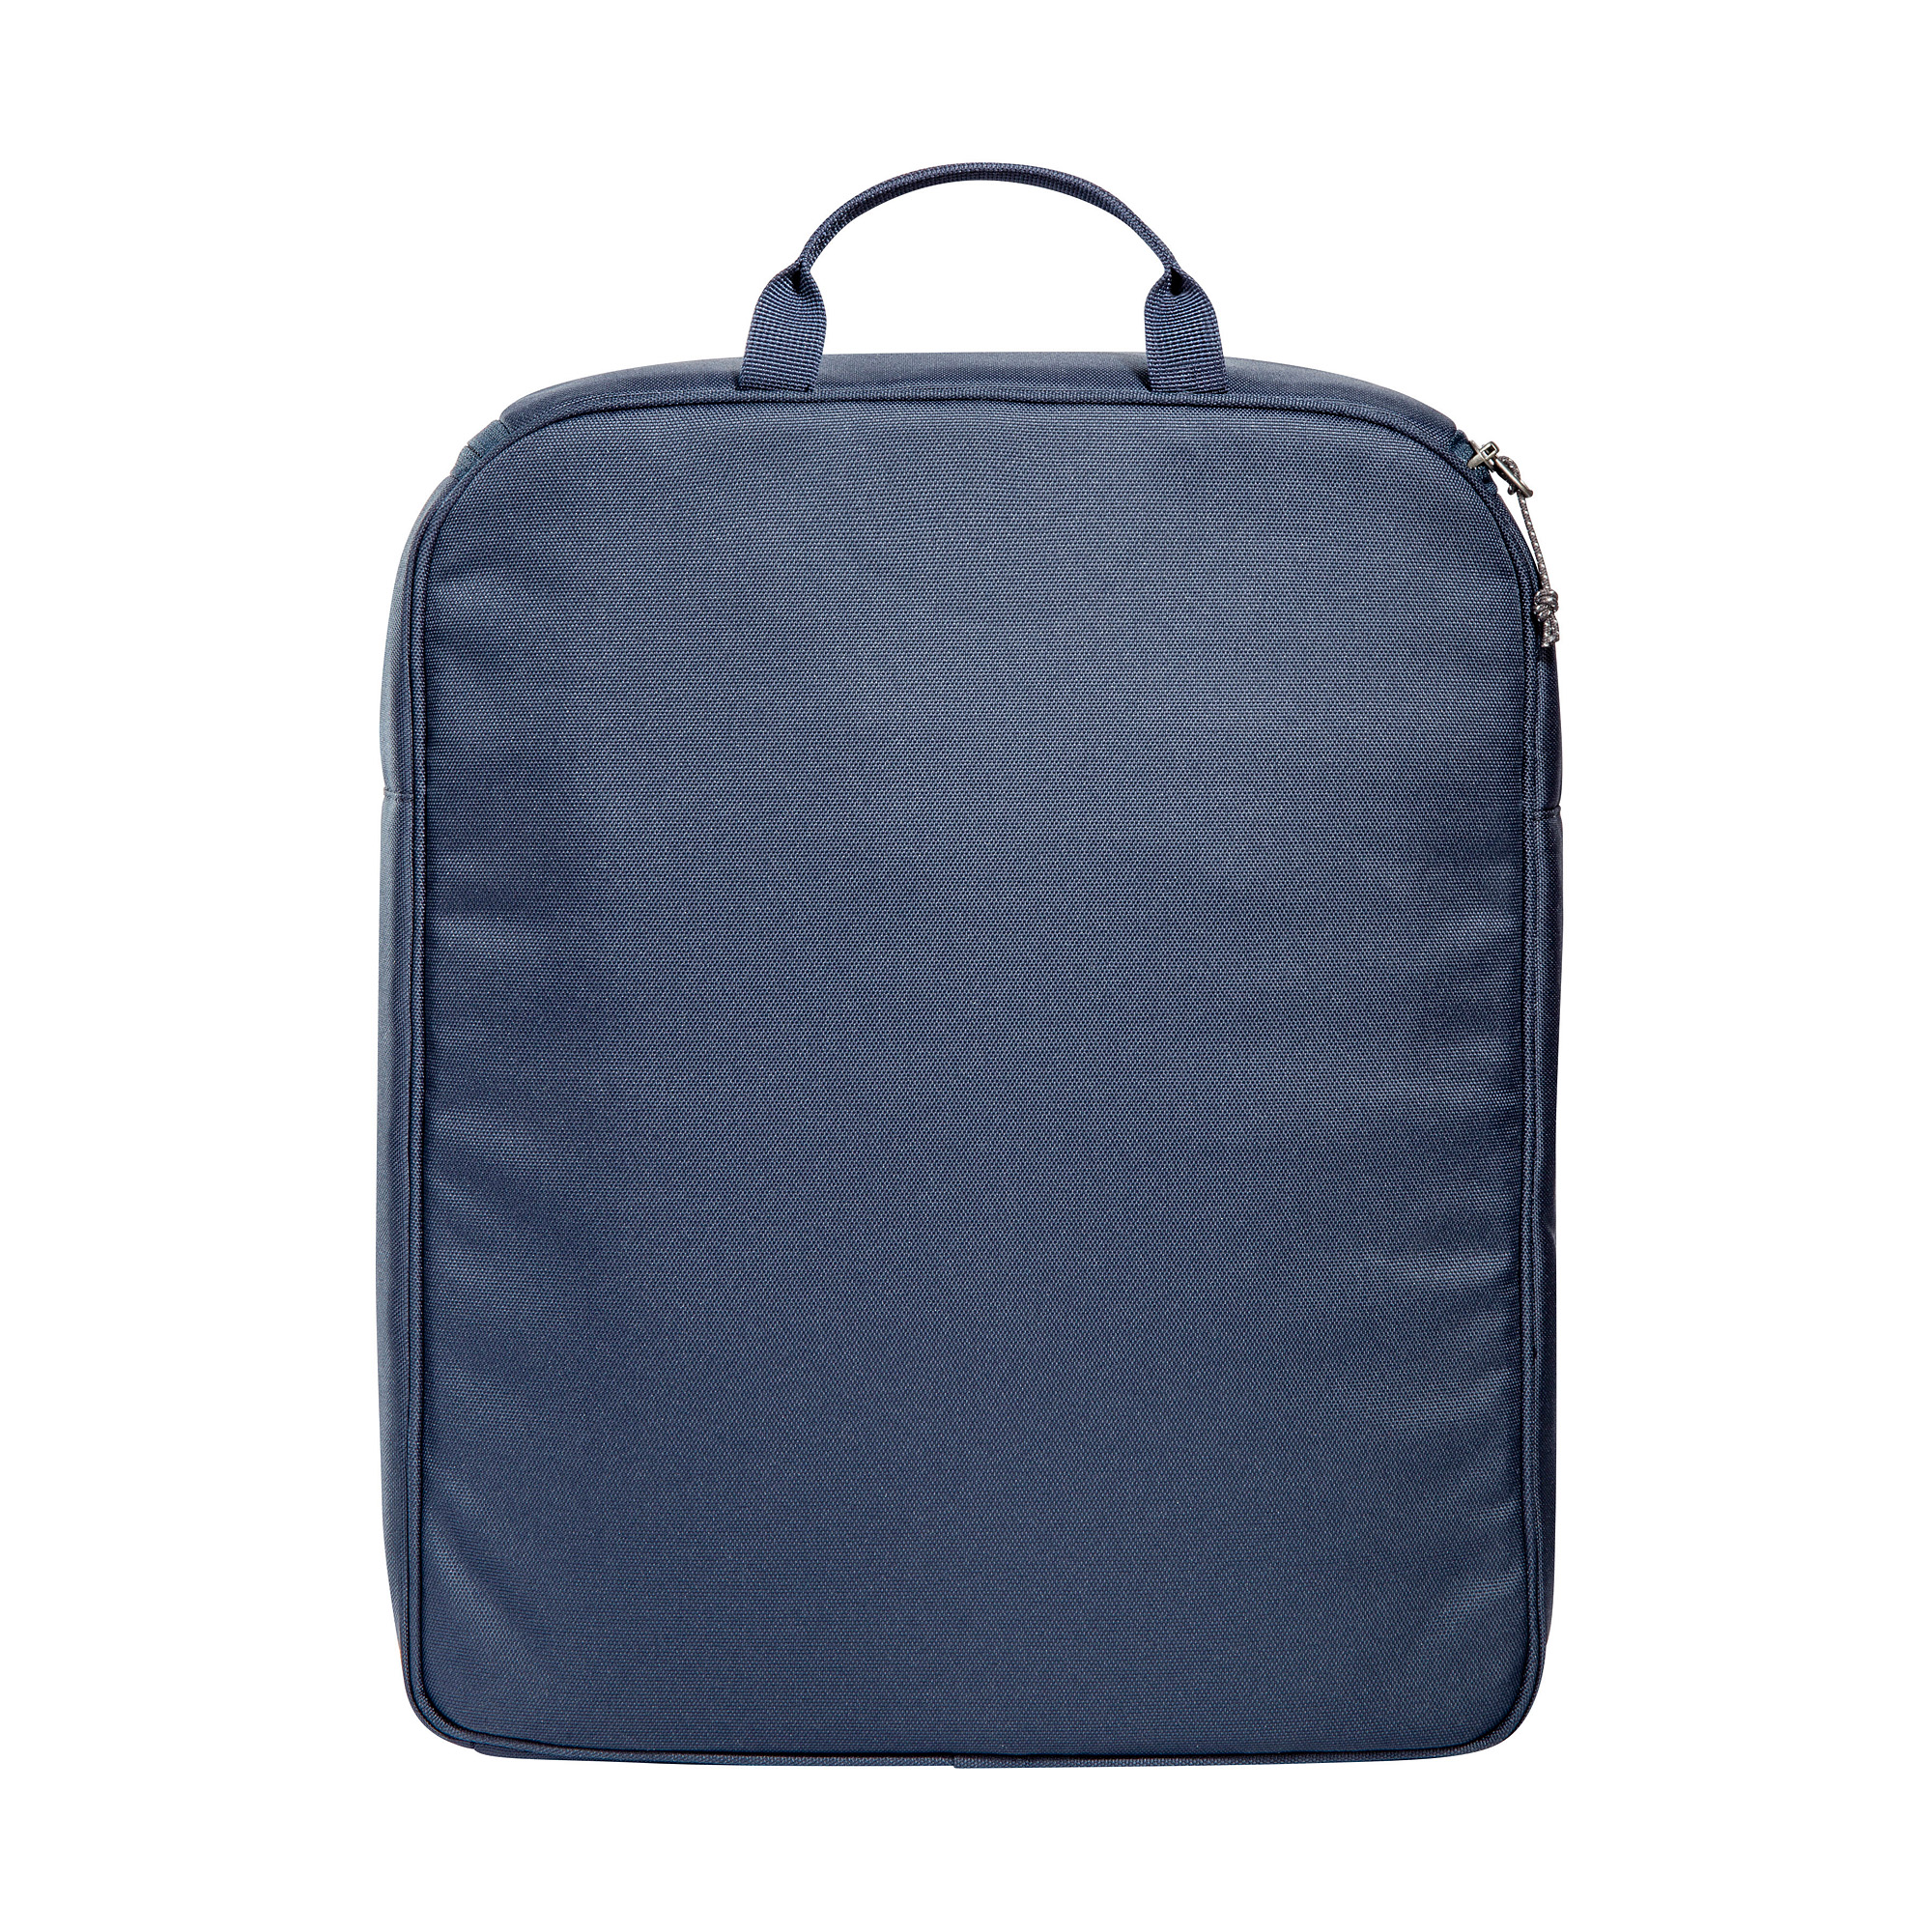 Tatonka Cooler Bag M navy blau Sonstige Taschen 4013236384543